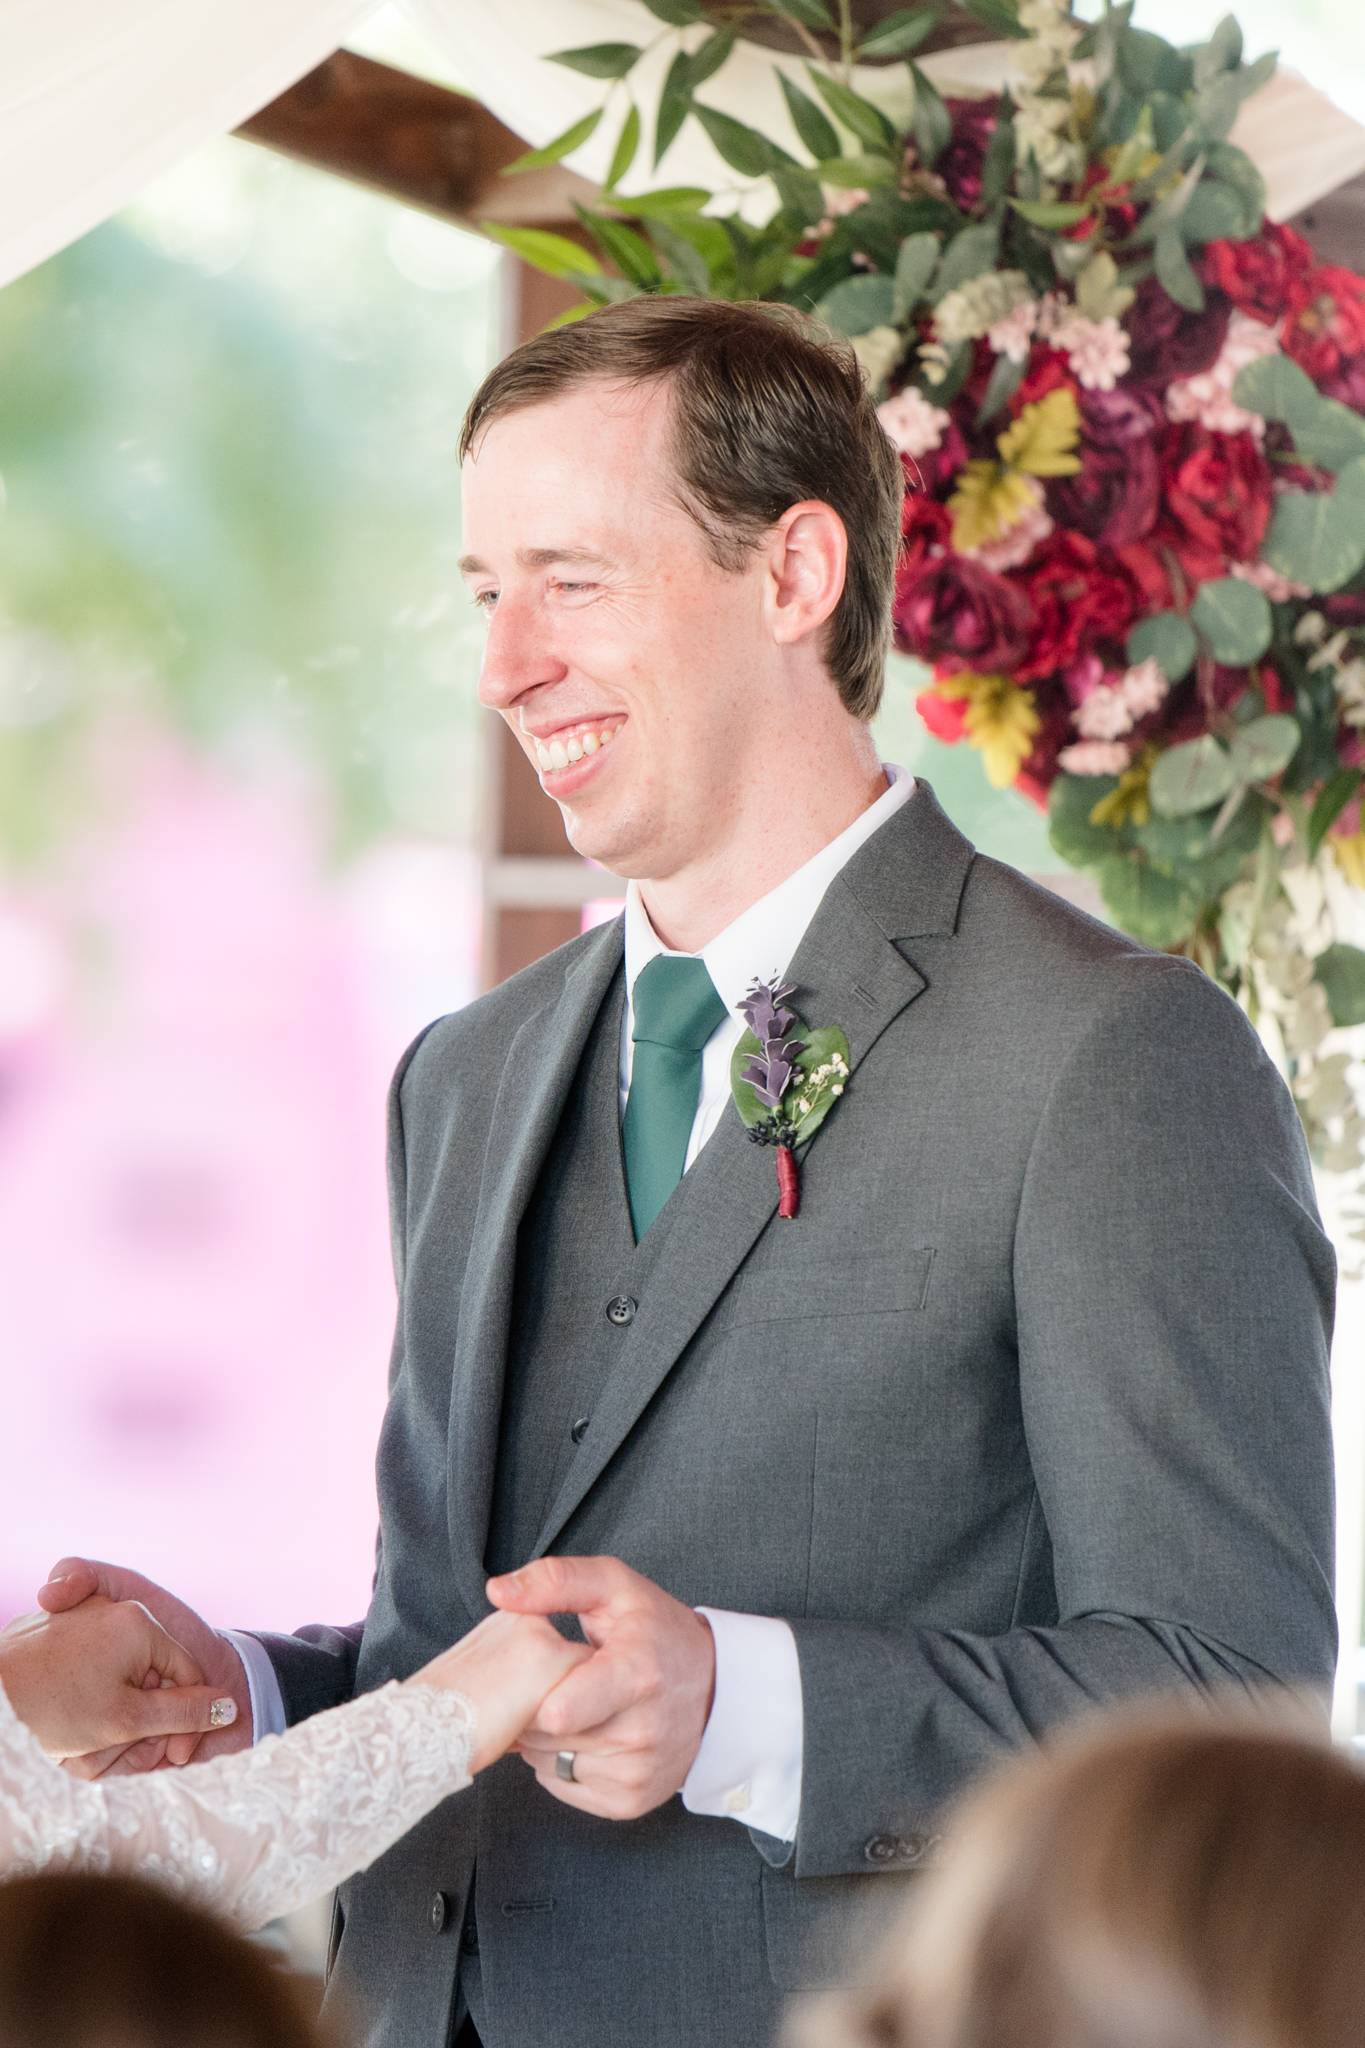 Groom smiles at bride during wedding.